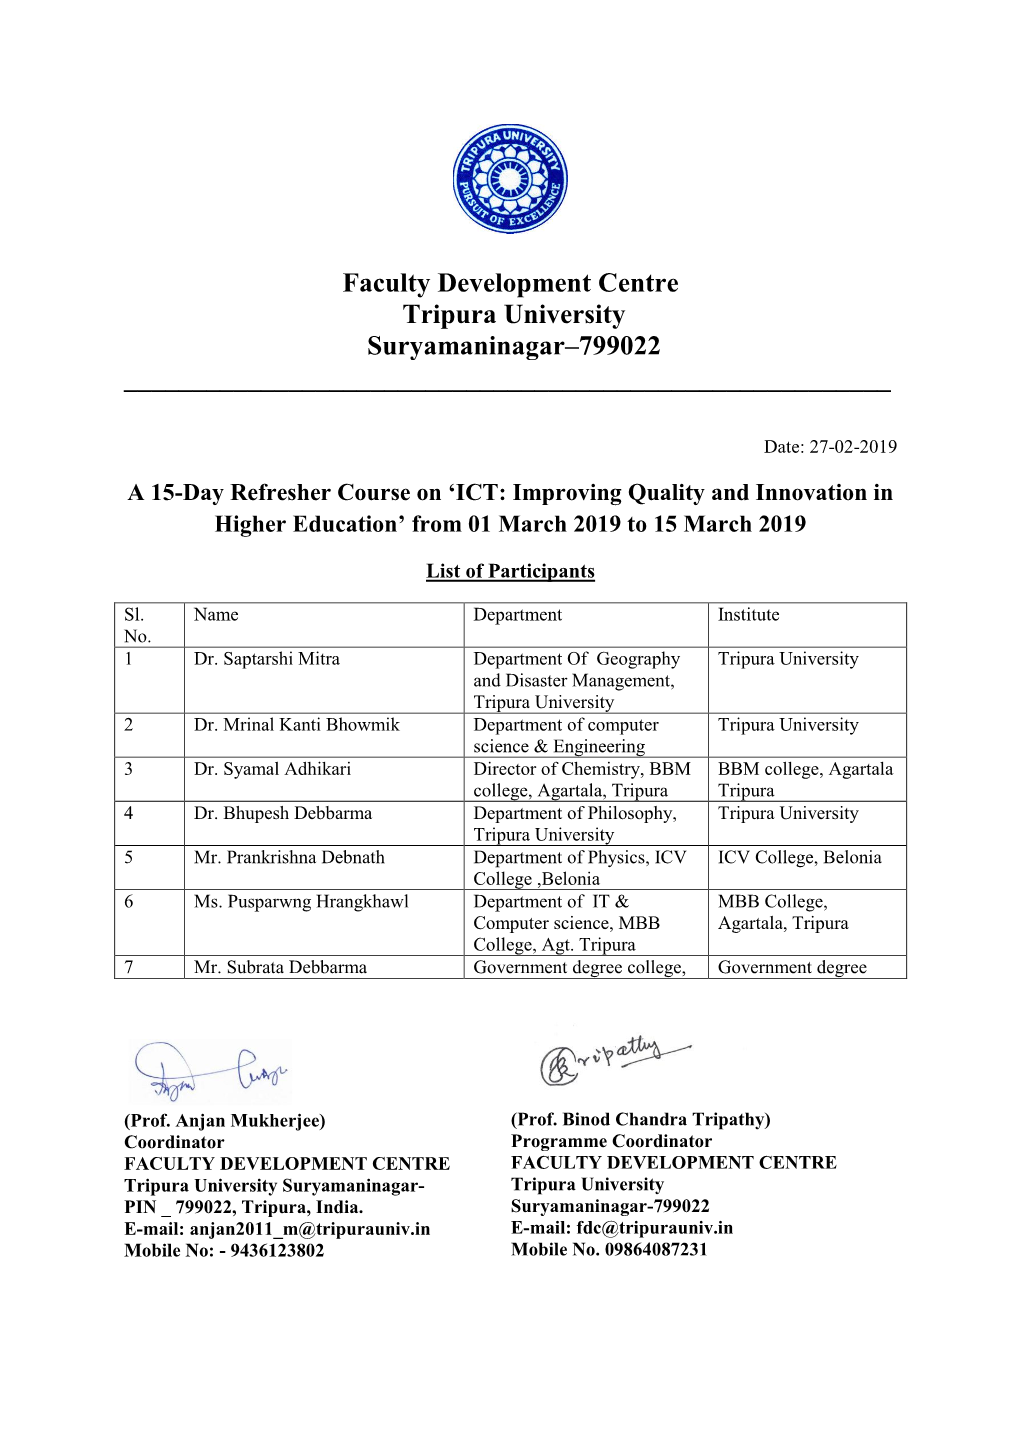 Faculty Development Center Tripura University Suryamaninagar–799022